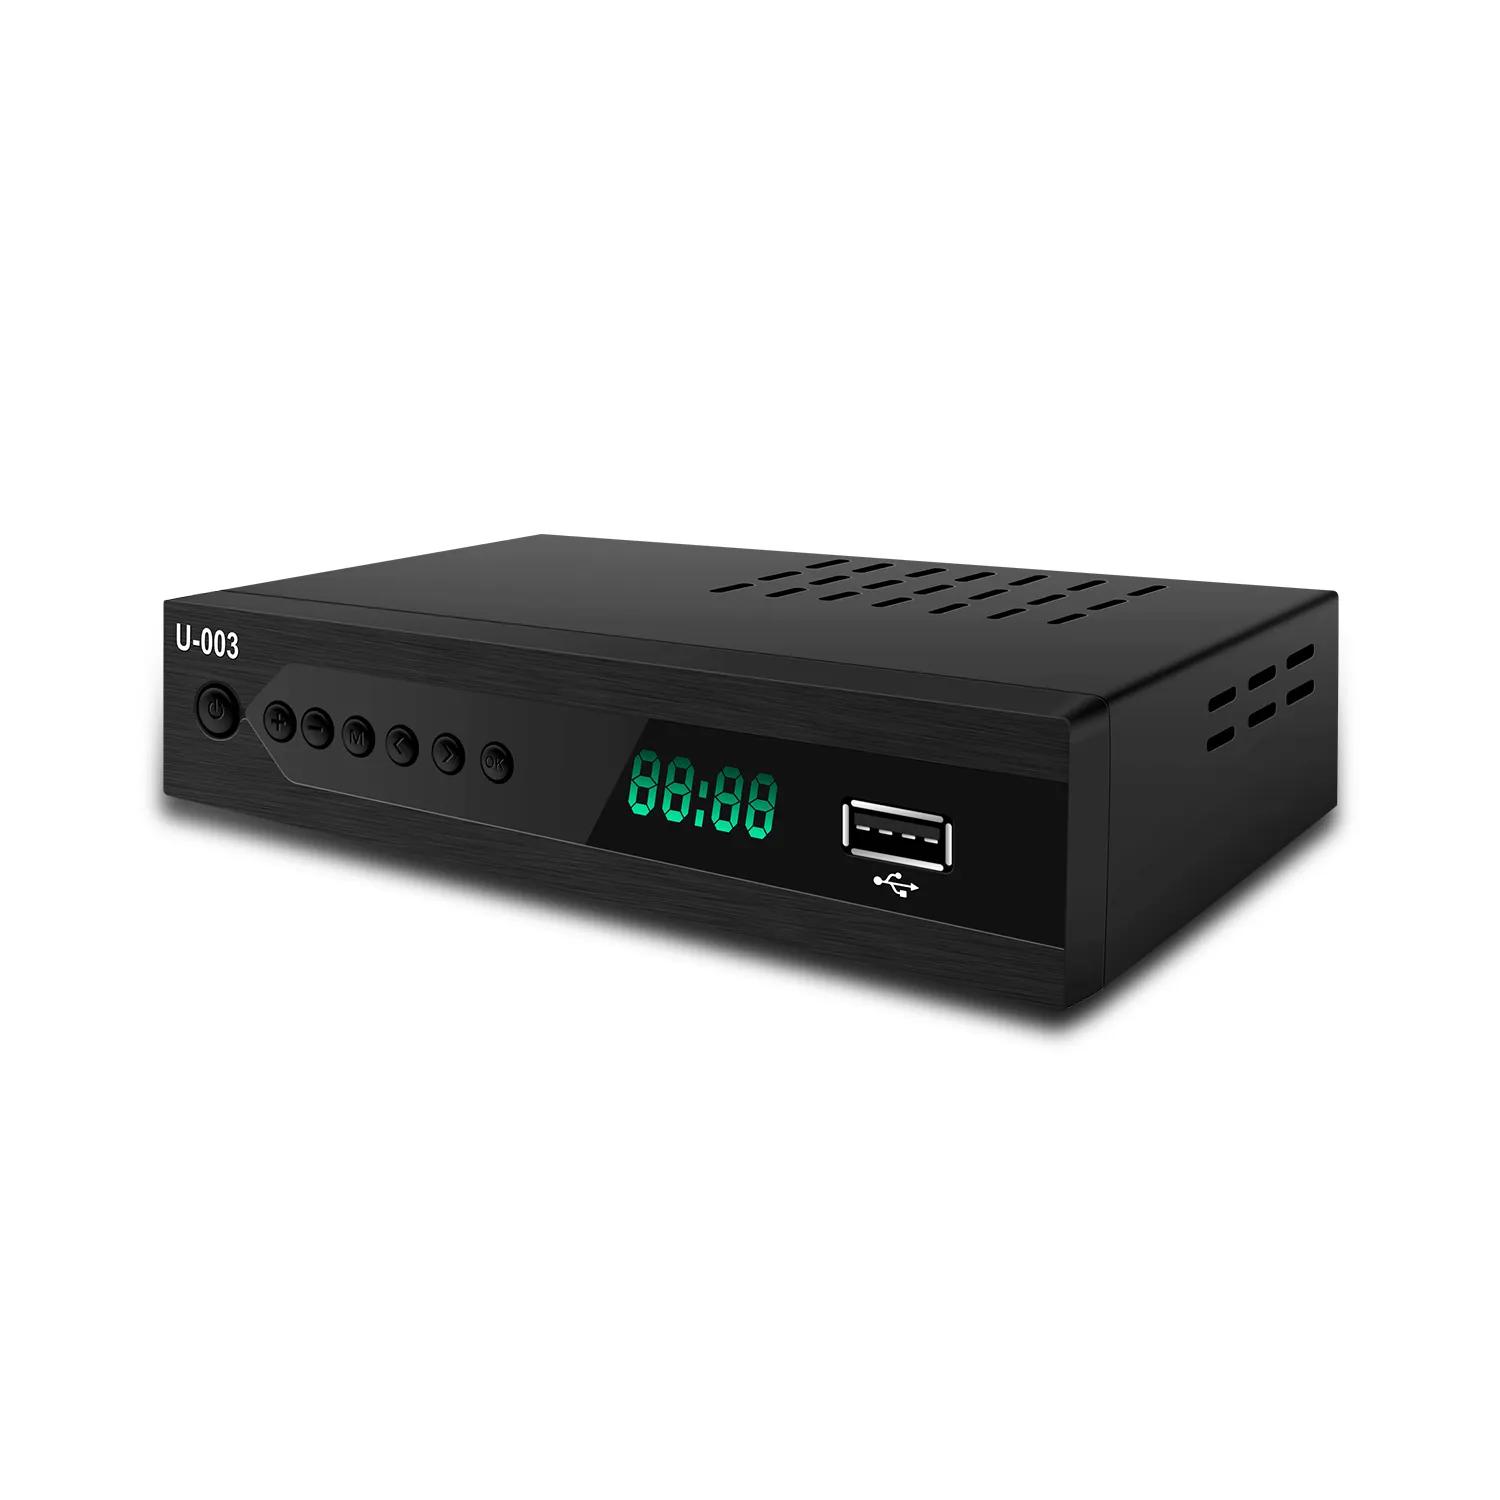 North America type ATSC Digital HDTV Converter Box Supports MPEG4 H.264 Media Player USB2.0 FTA TV Decoder ATSC Tuner